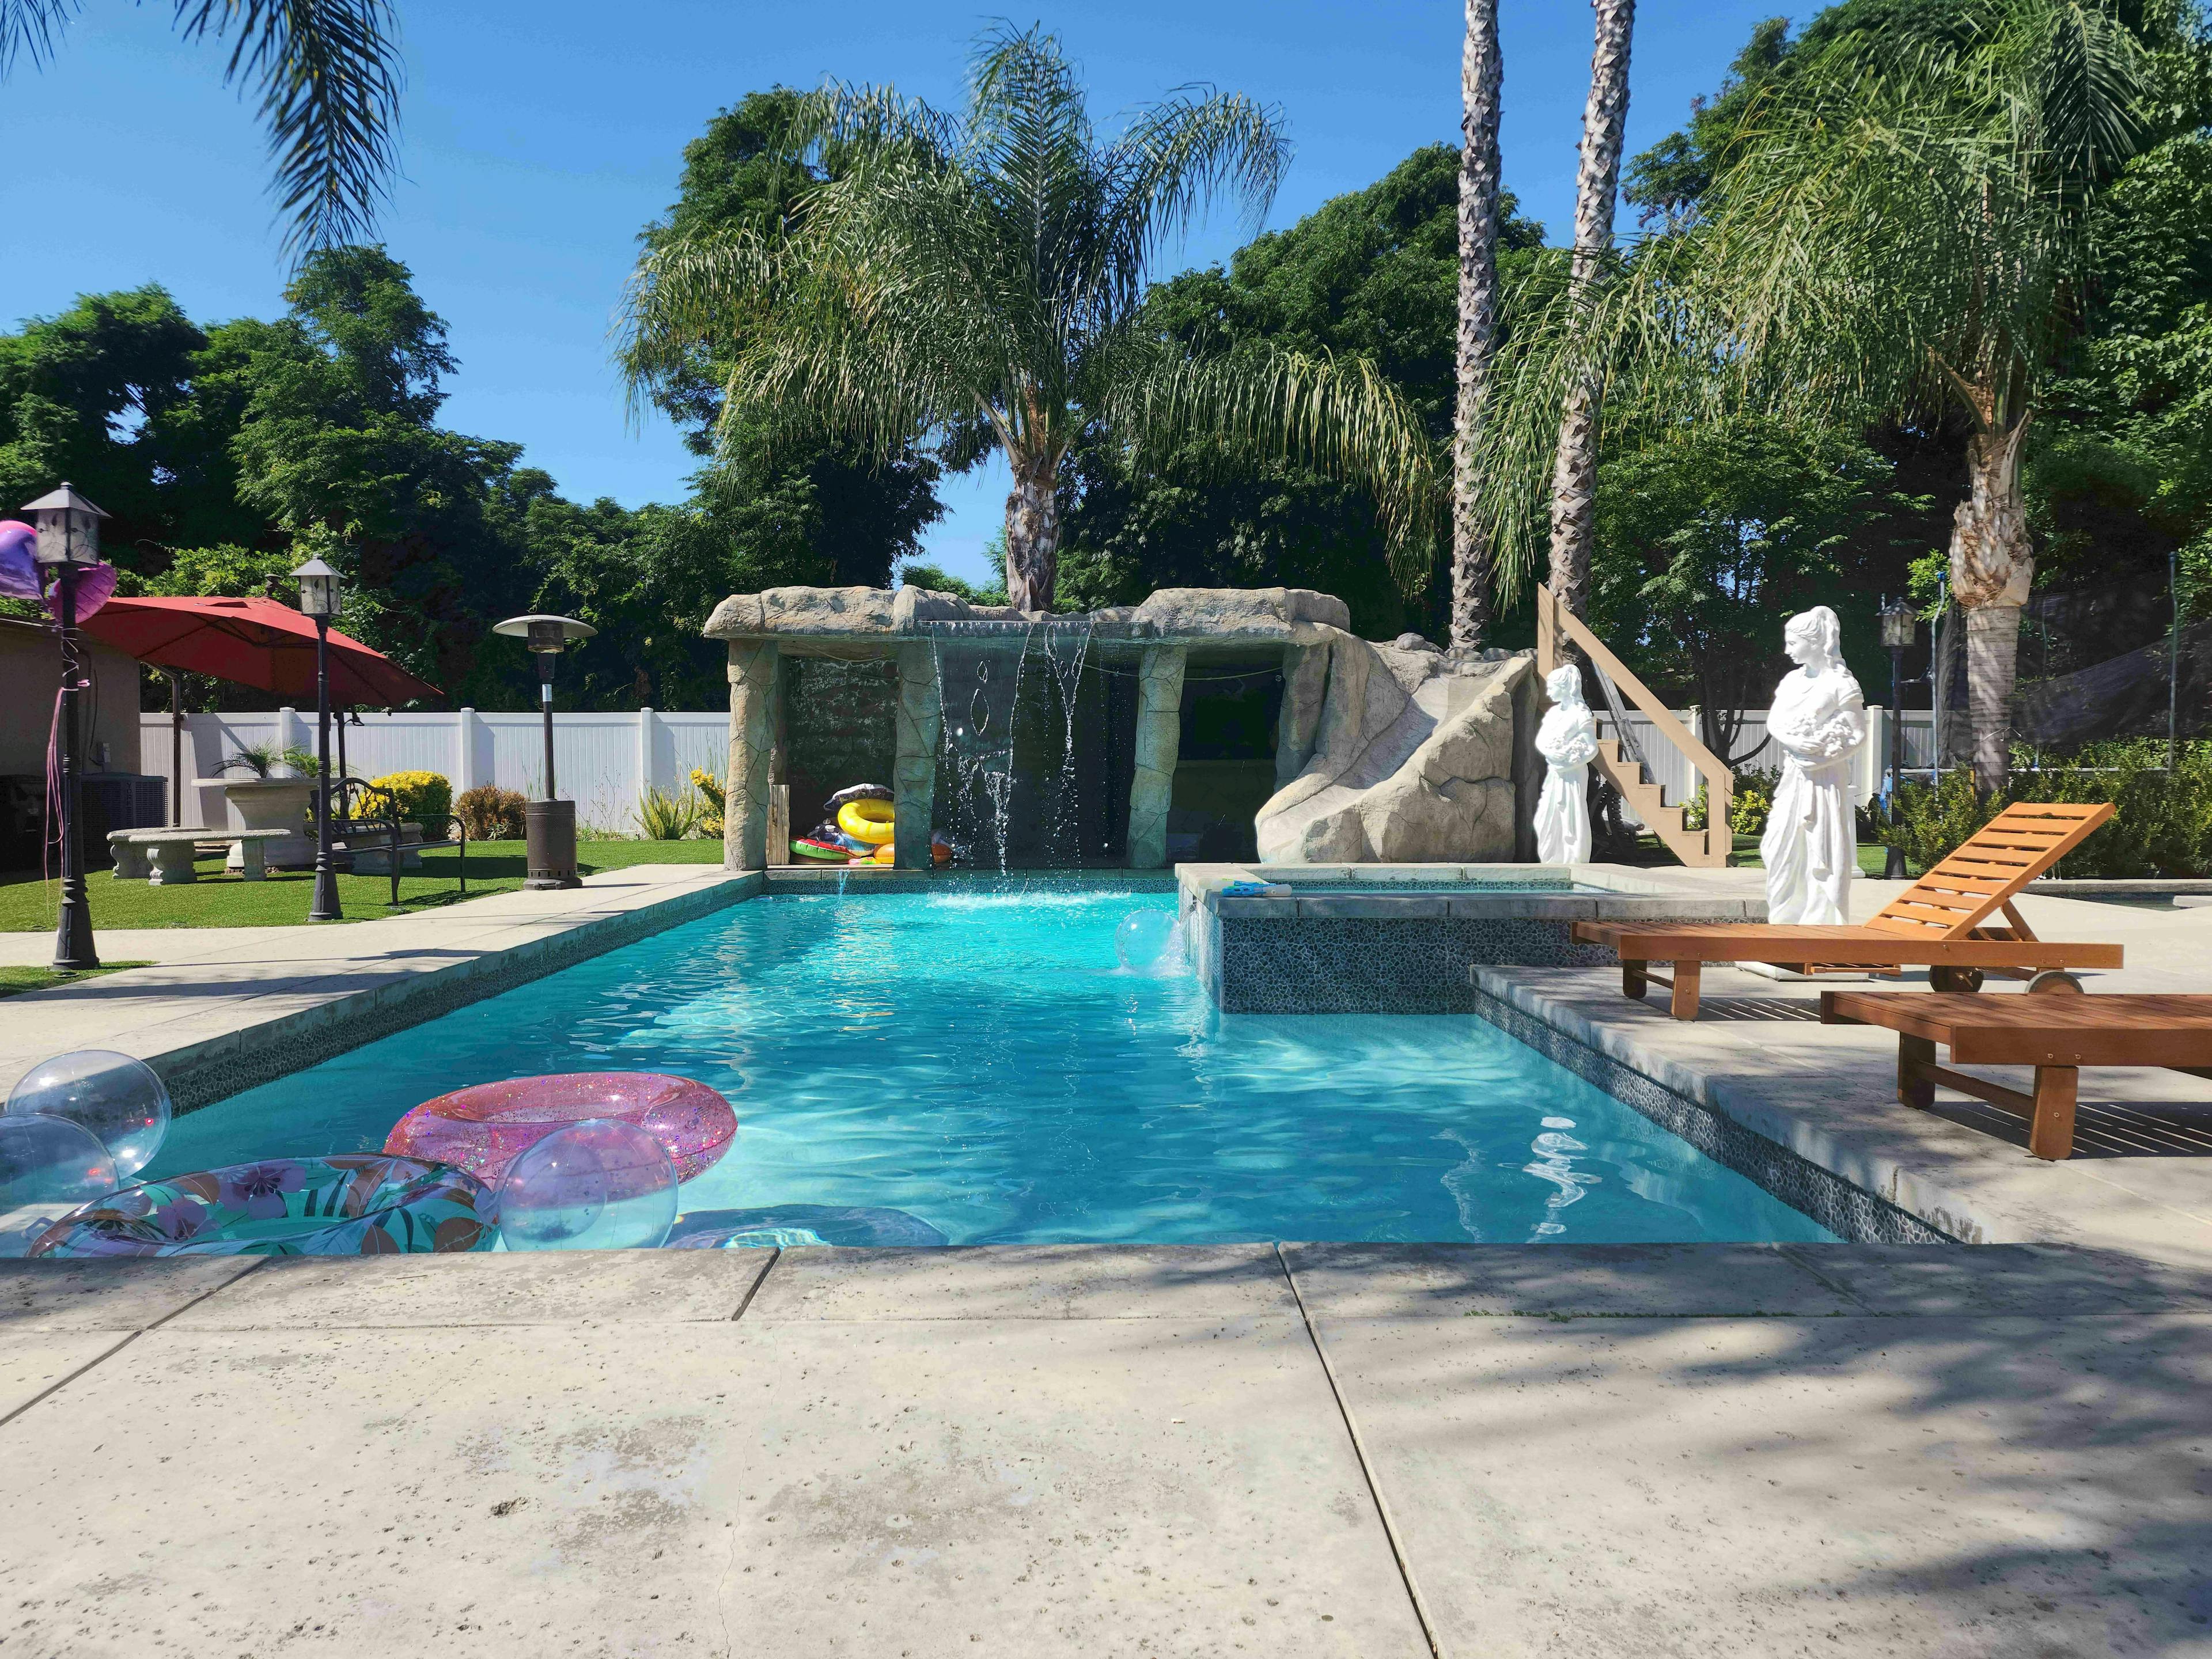 Valley Paradise - Resort Style (Free) Heated Pool w/Slide & Waterfall - 20% Discount on Weekdays